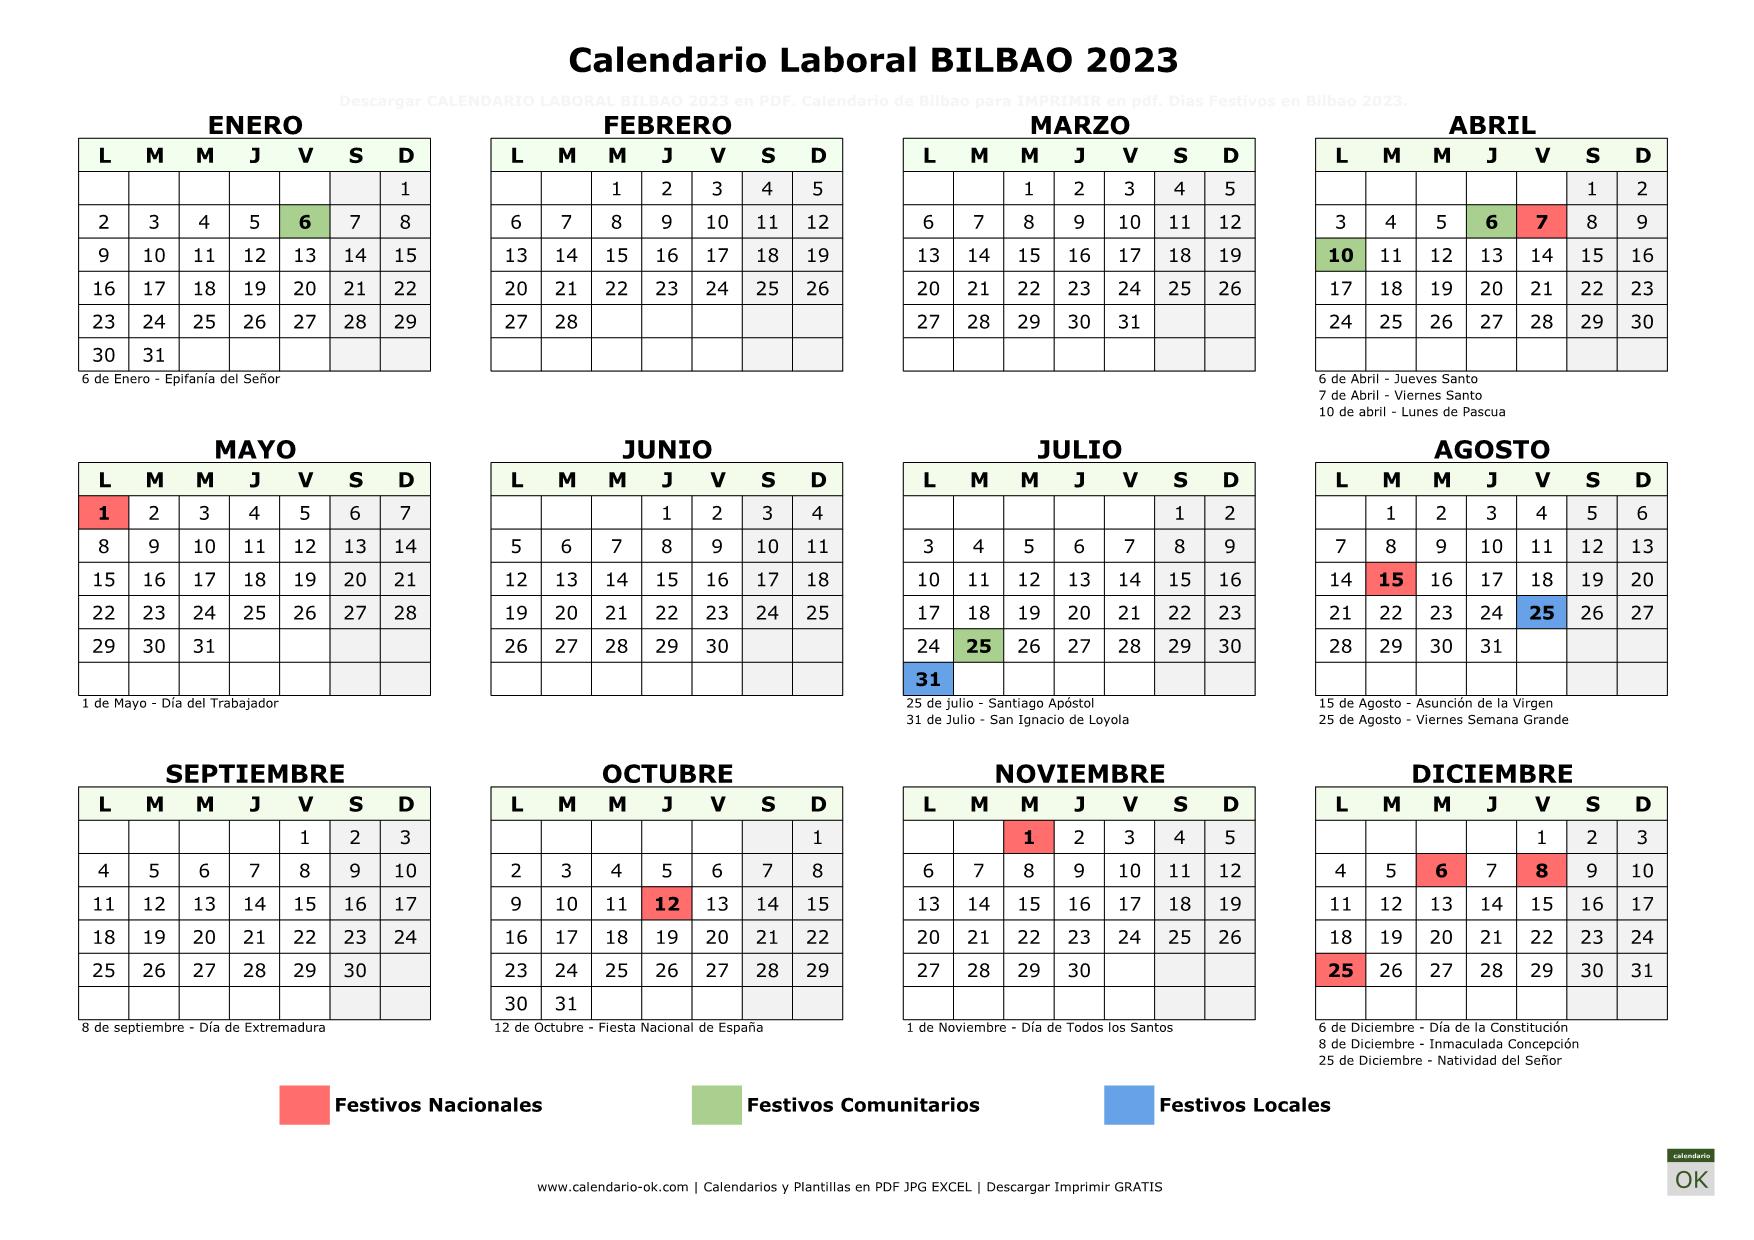 Calendario Laboral Bilbao 2023 horizontal